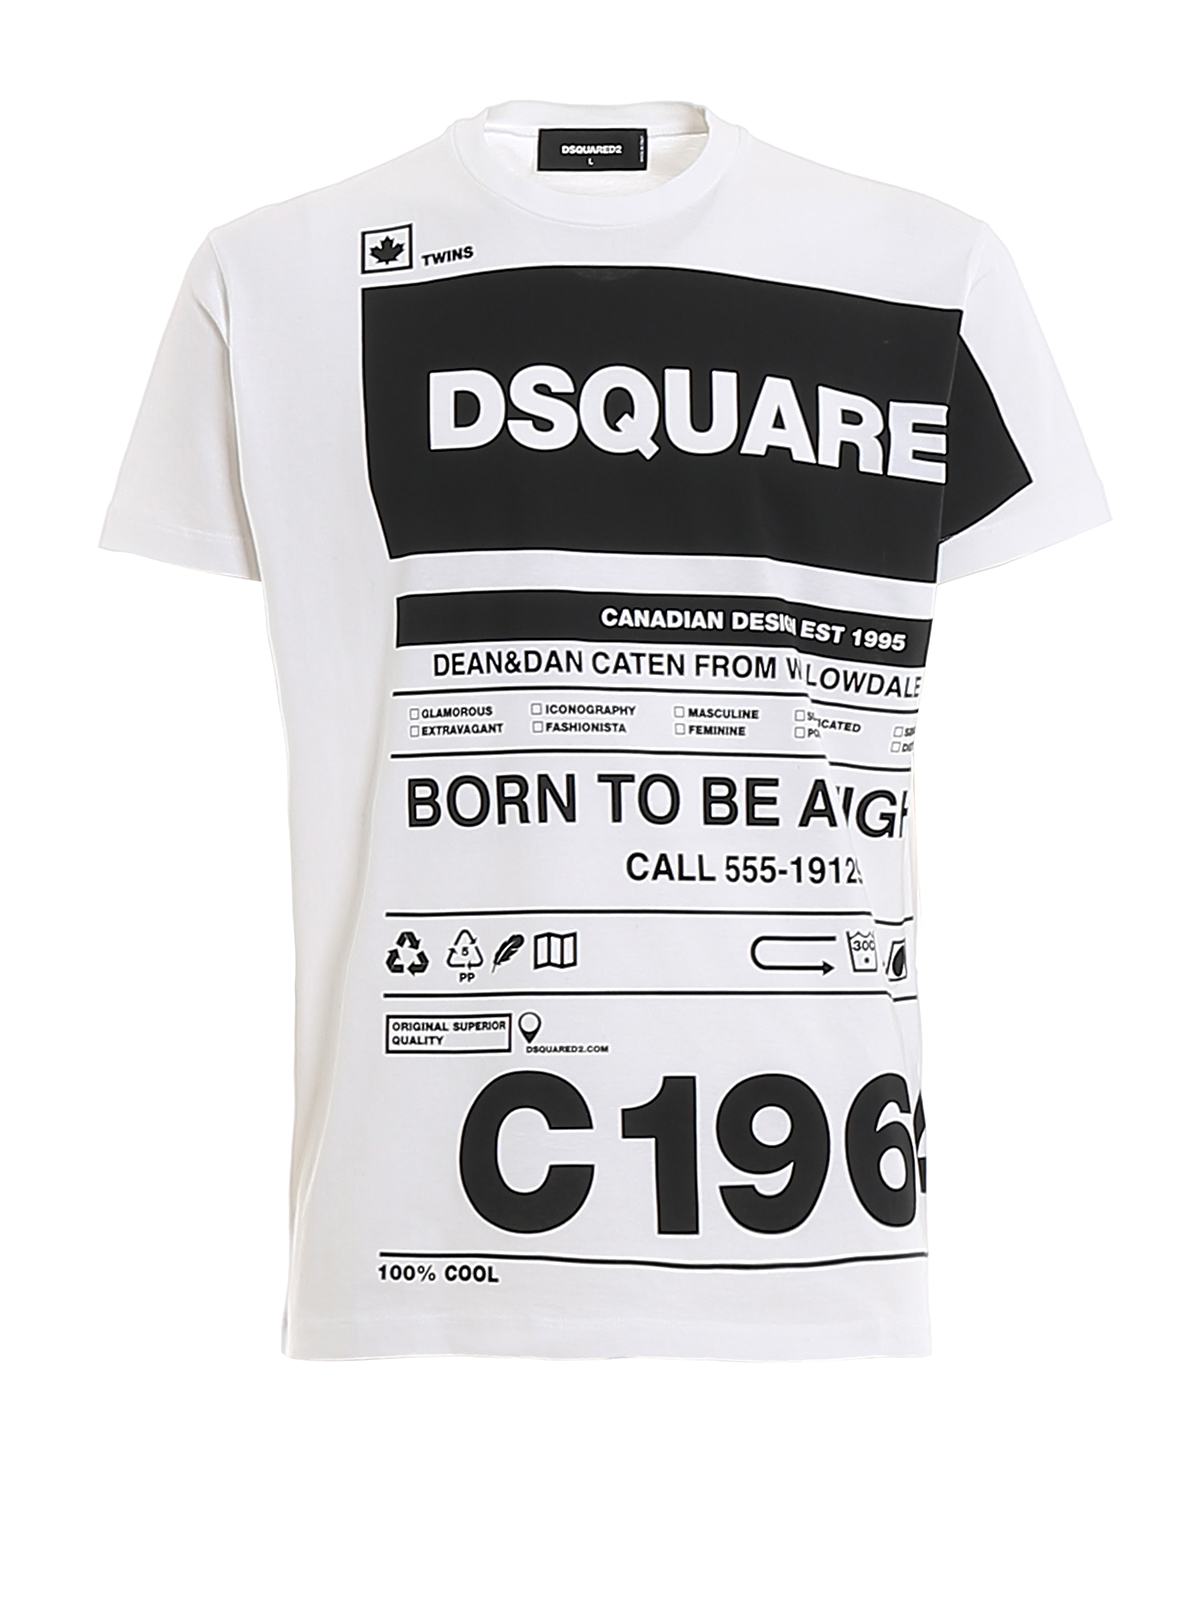 Tシャツ Dsquared2 - Tシャツ - 白 - S74GD0697S22427100 | iKRIX.com